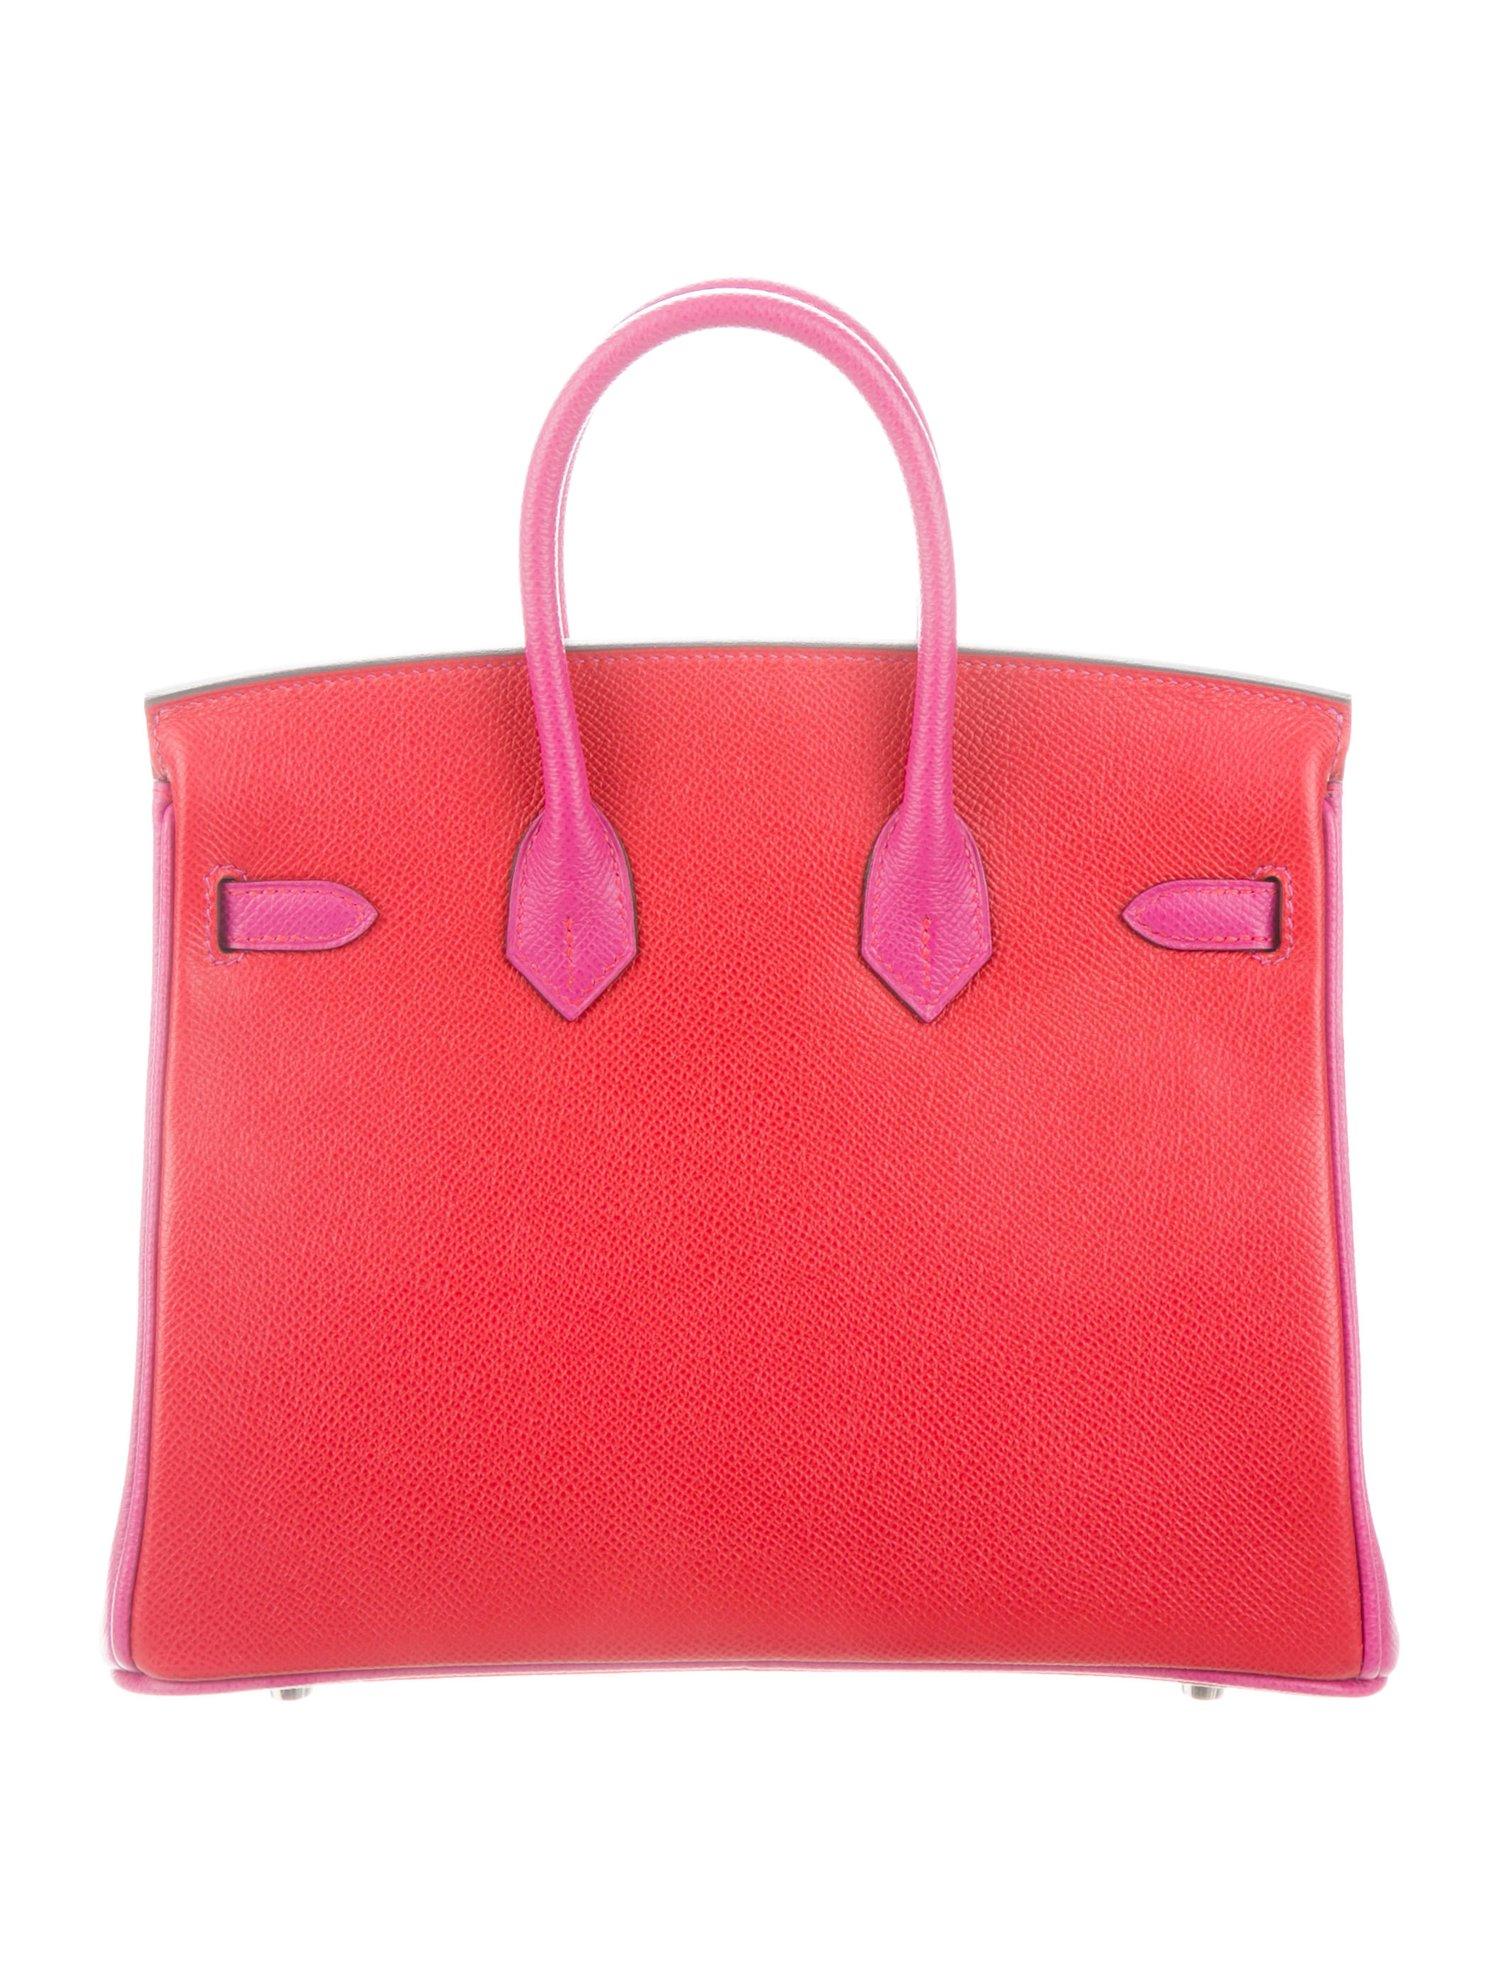 Red Hermes NEW Birkin 25 Palladium Limited Edition Top Handle Satchel Tote Bag W/Box